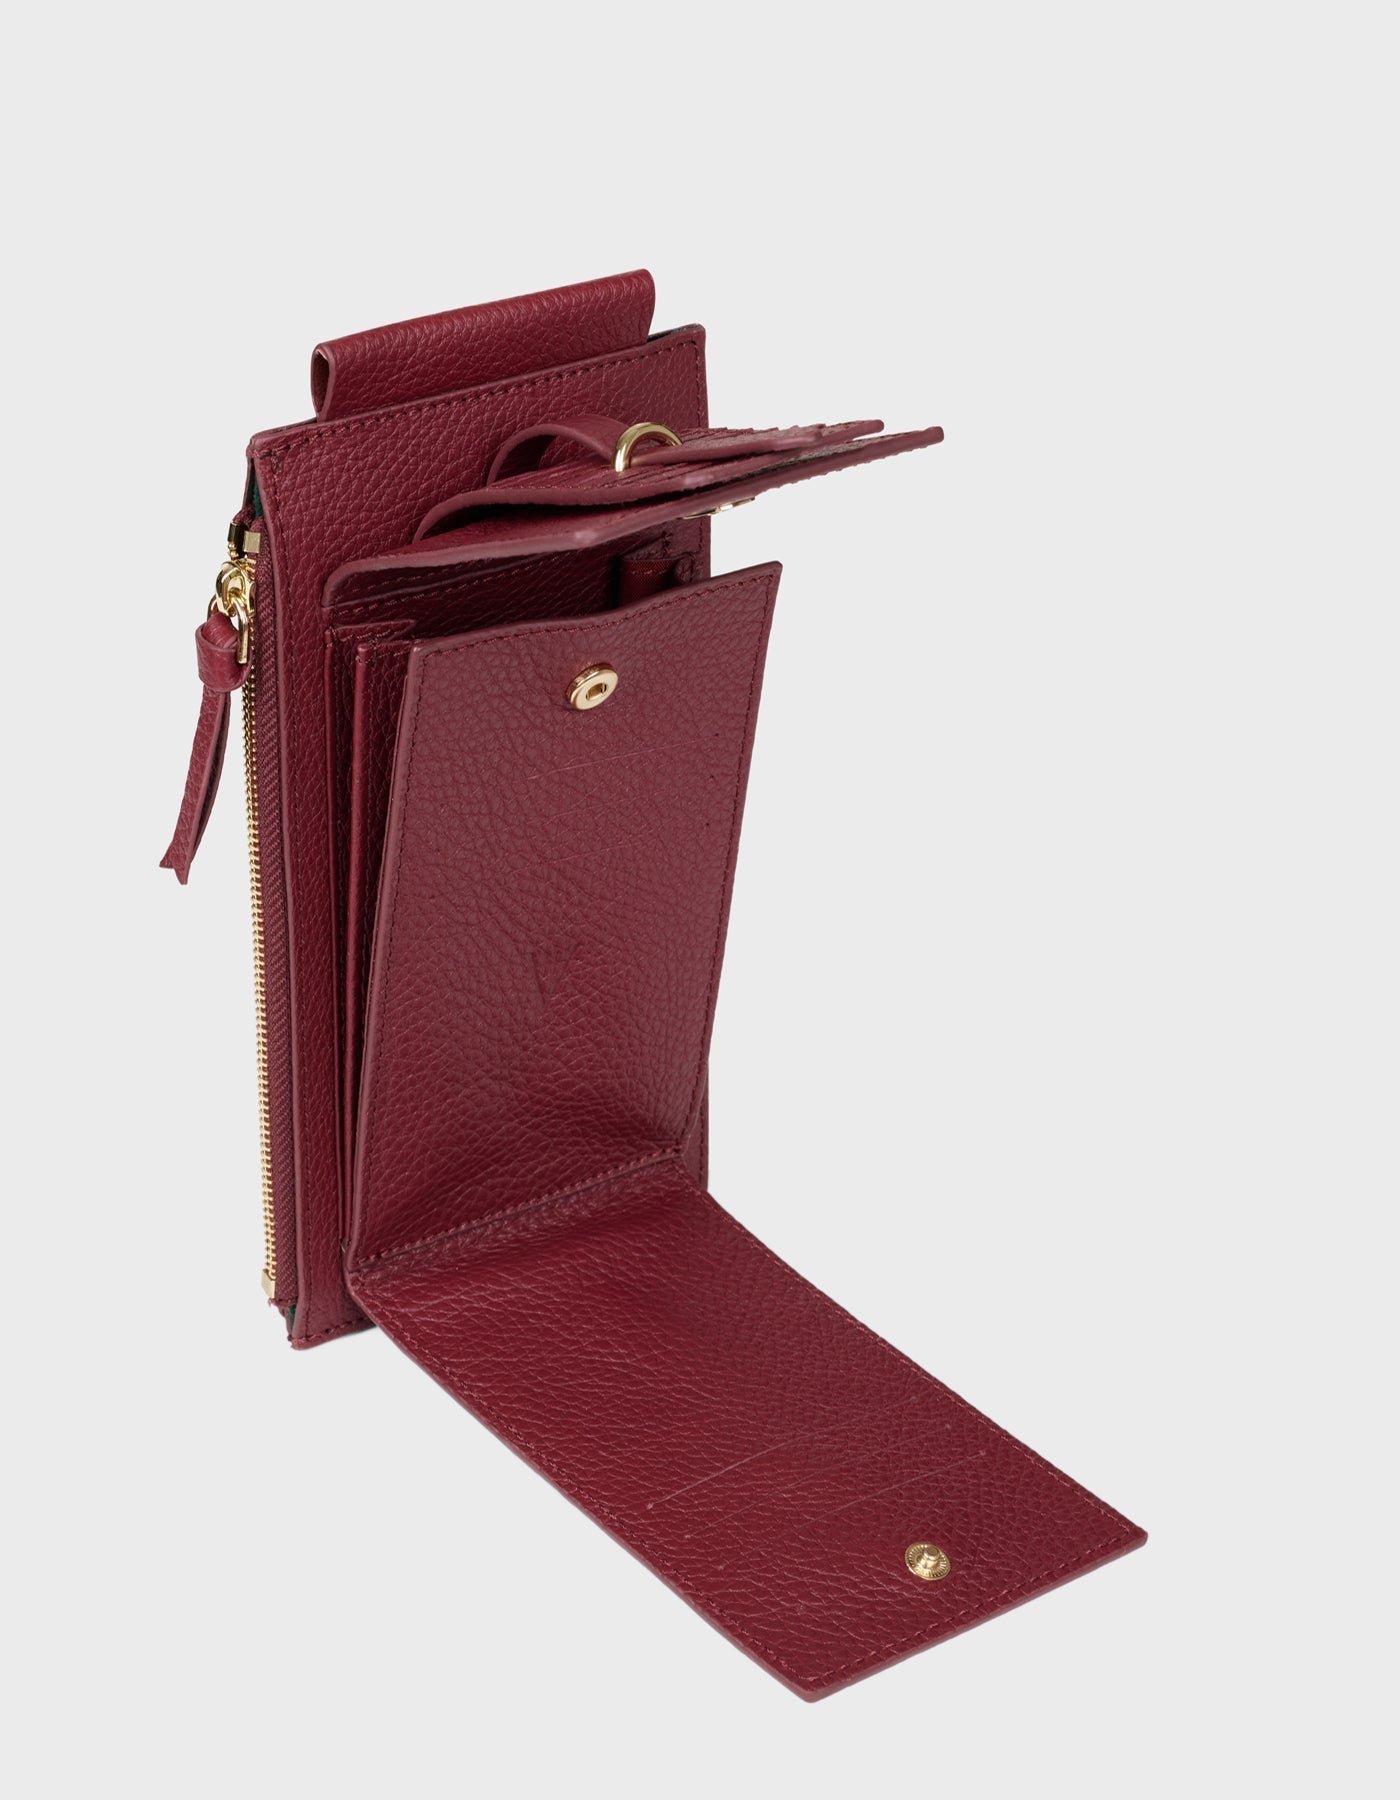 Crossbody Phone Bag - Finest Quality HiVa Atelier GmbH Leather Accessories